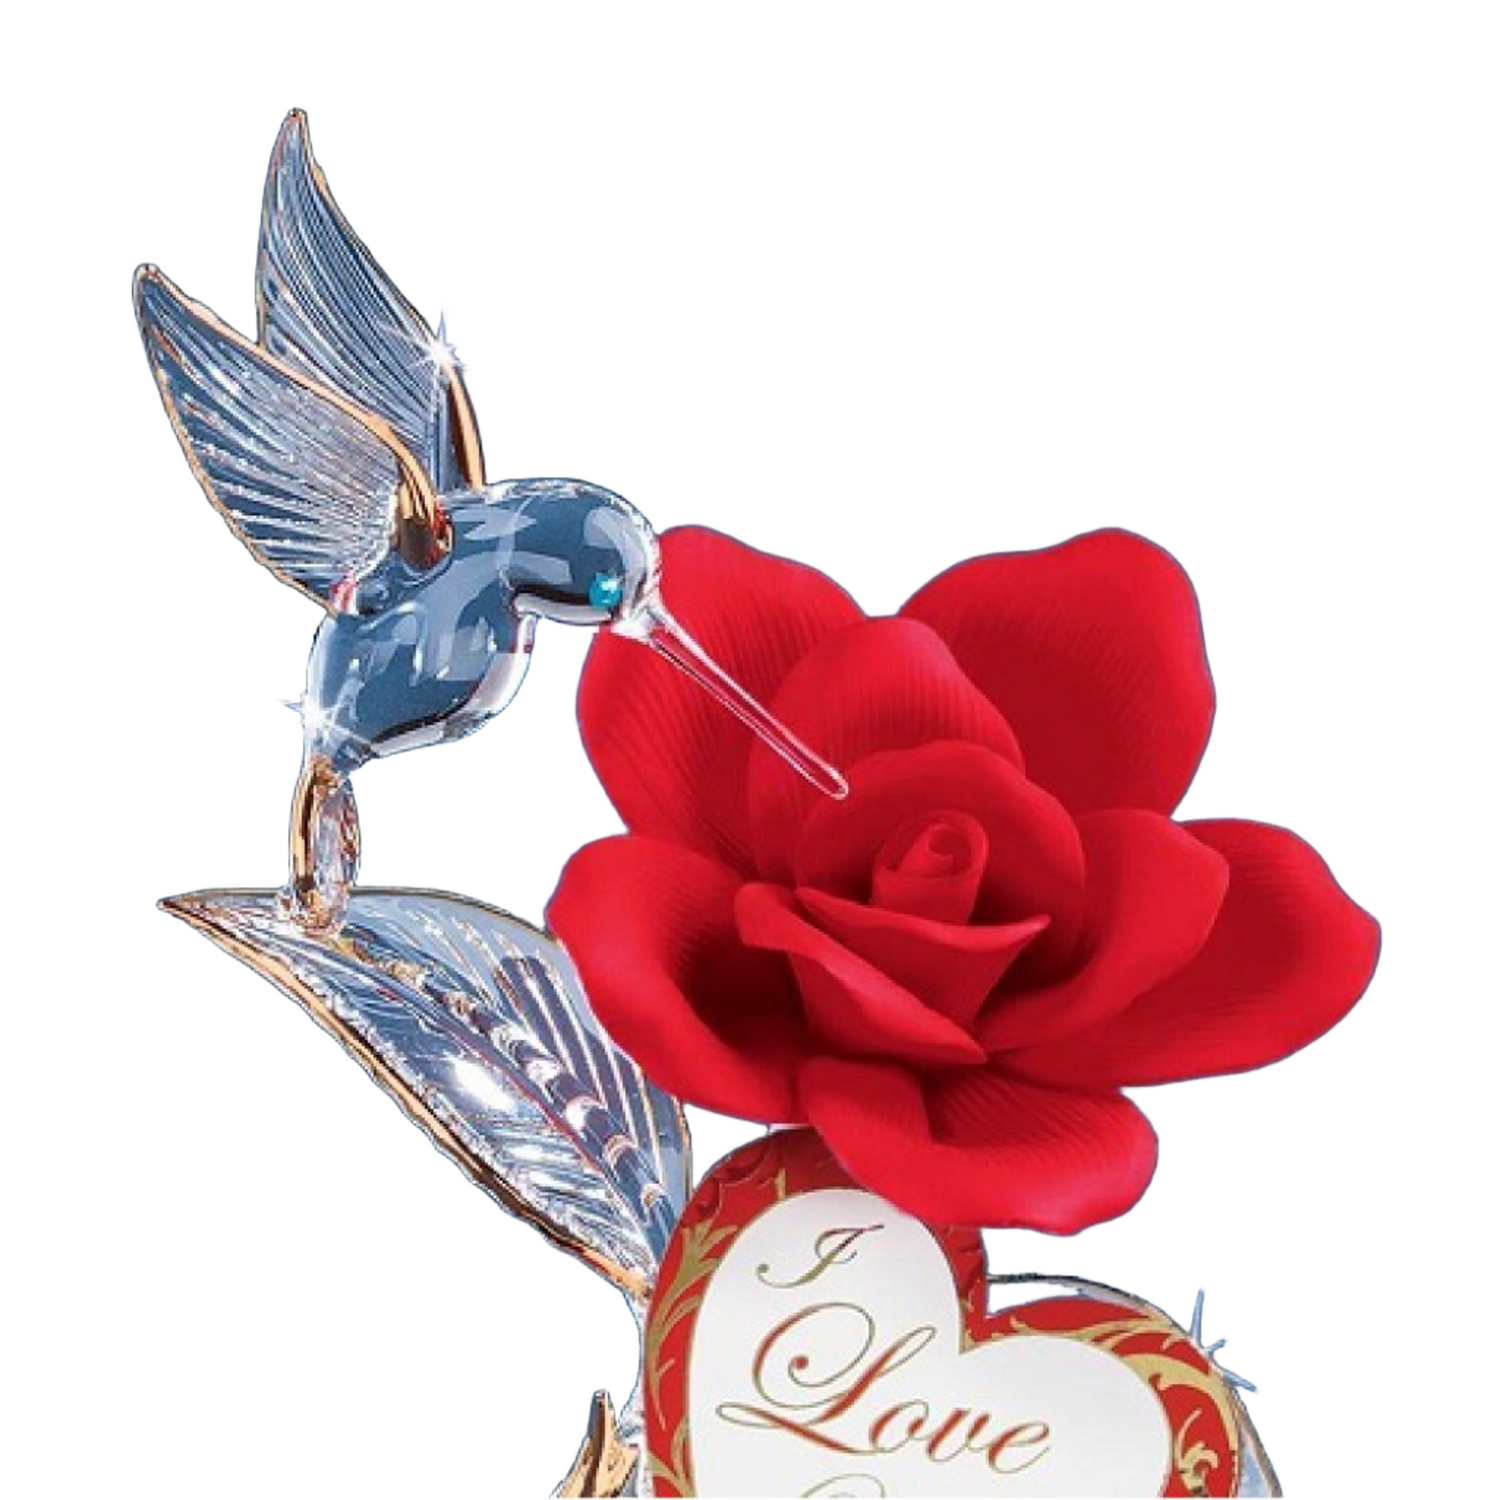 Glass Baron Hummingbird "I Love You" Rose Figure